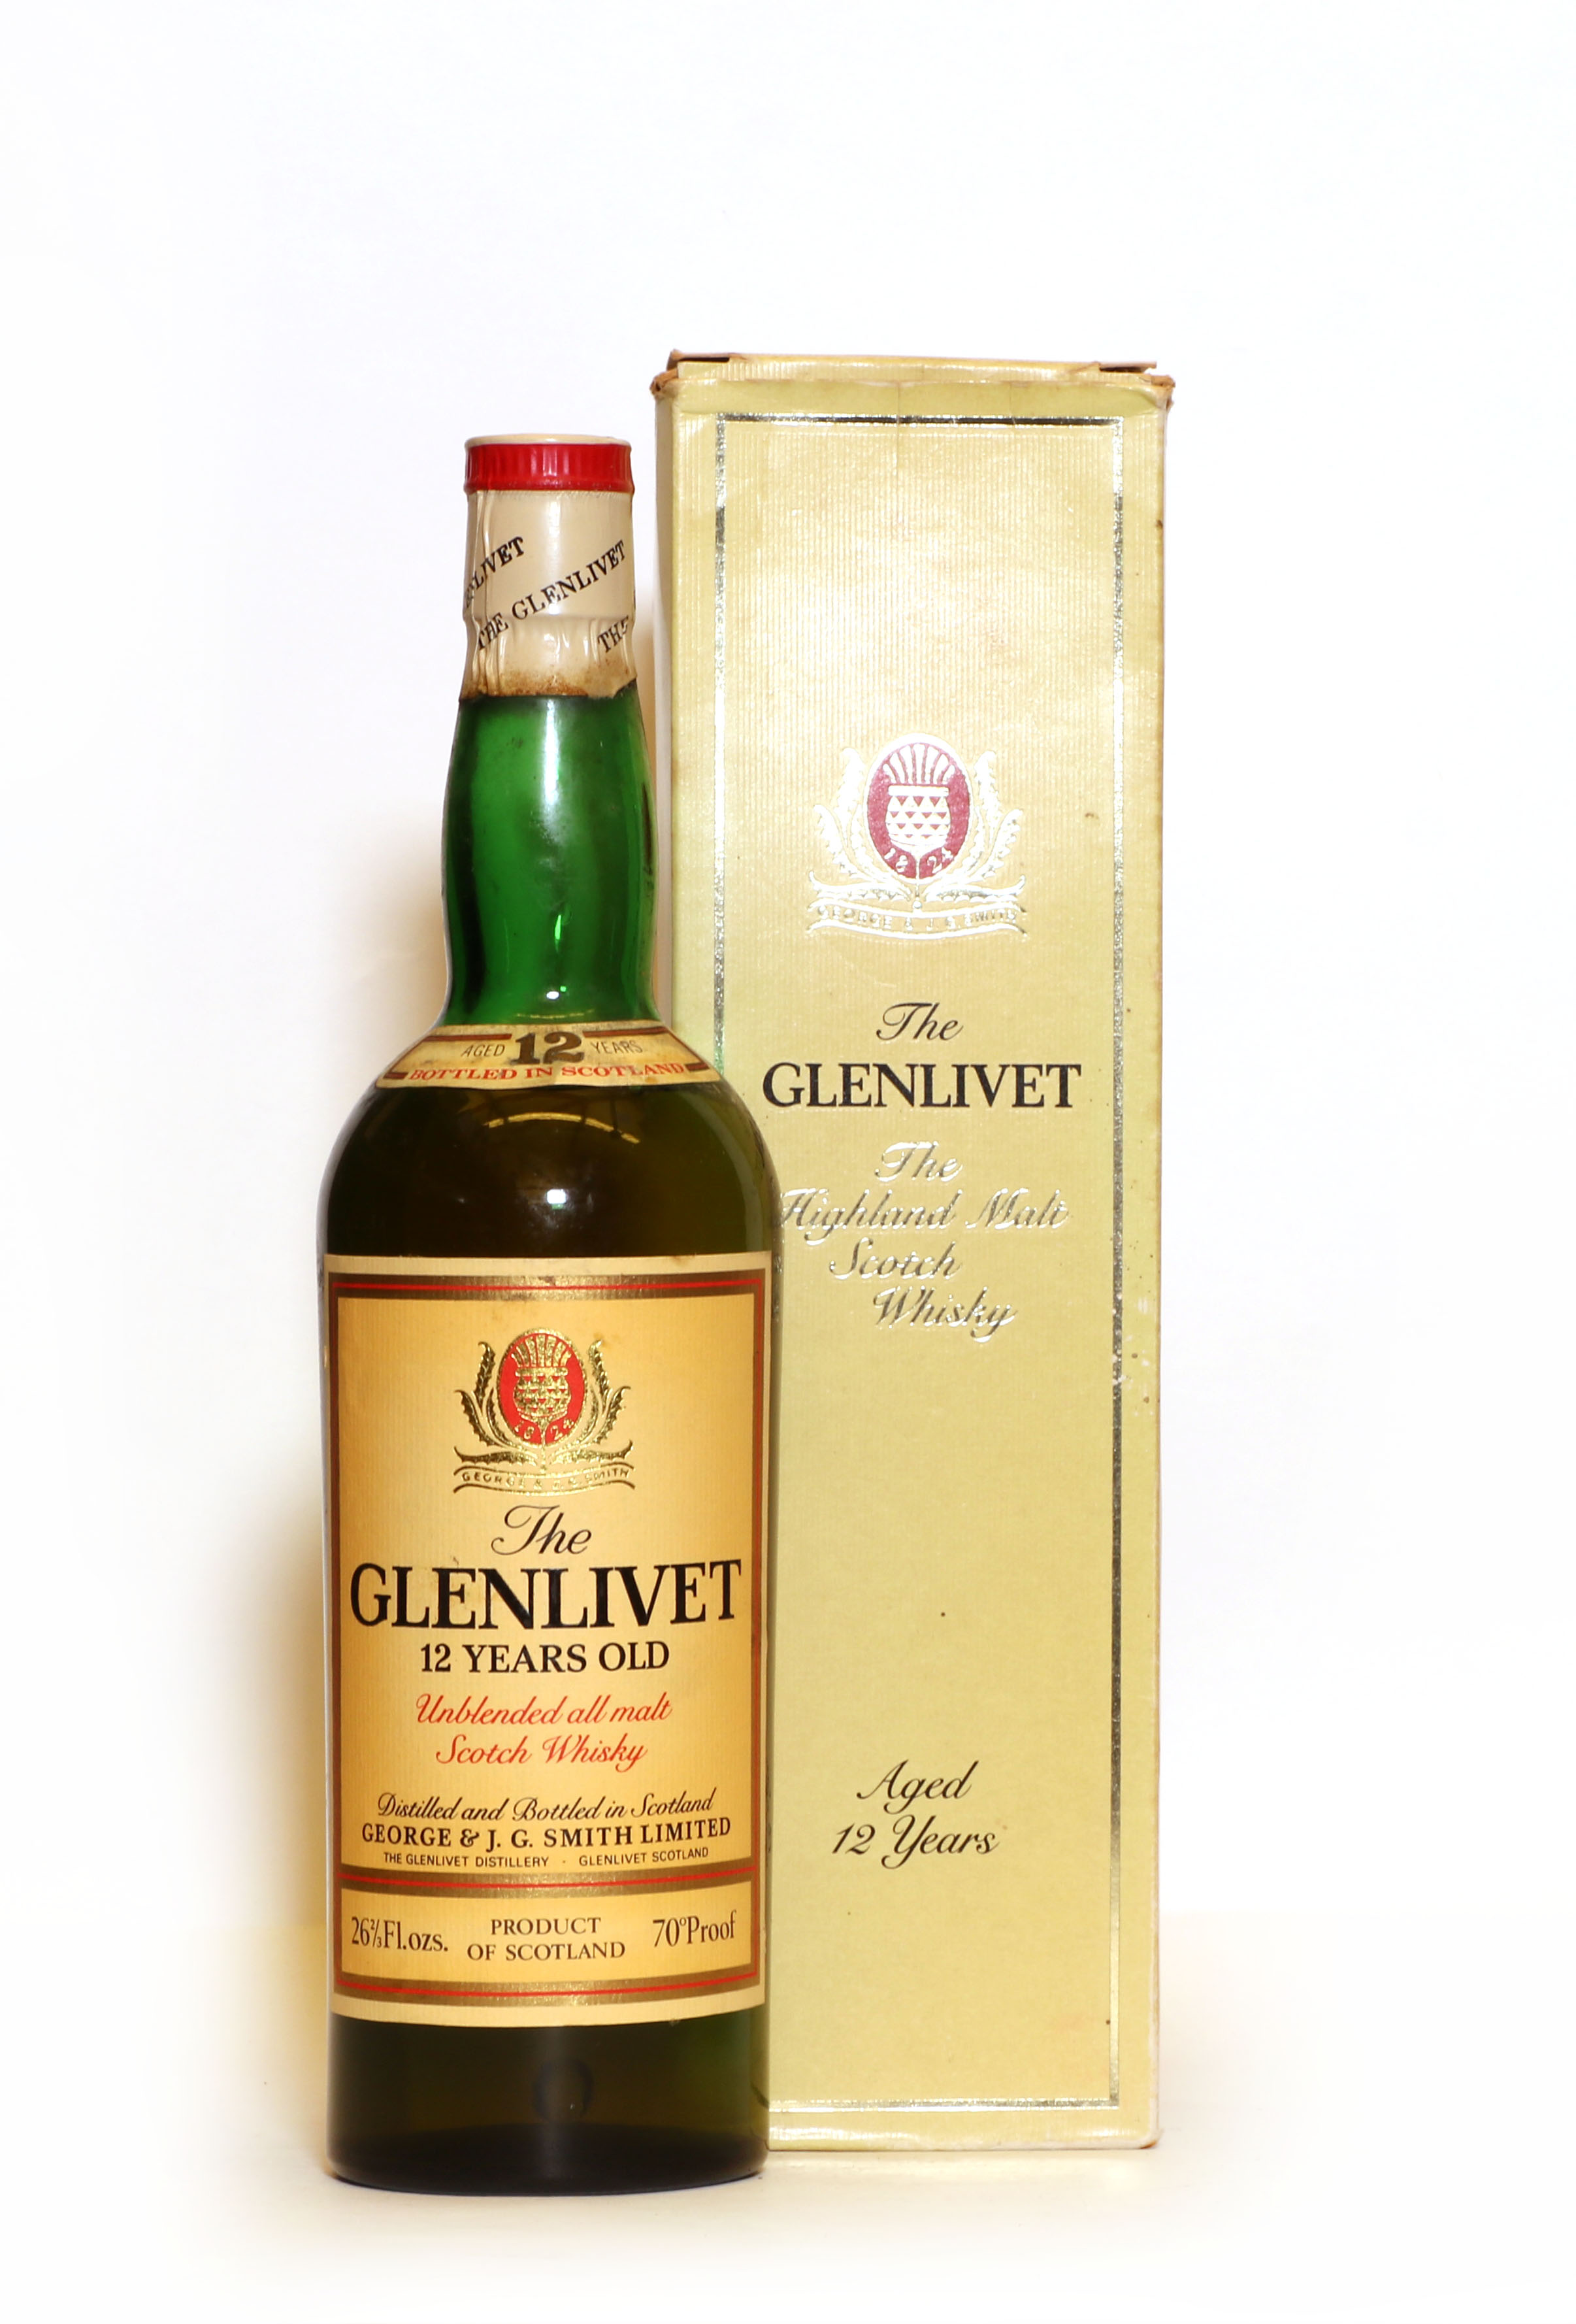 The Glenlivet, 12 Year Old Unblended All Malt Scotch Whisky